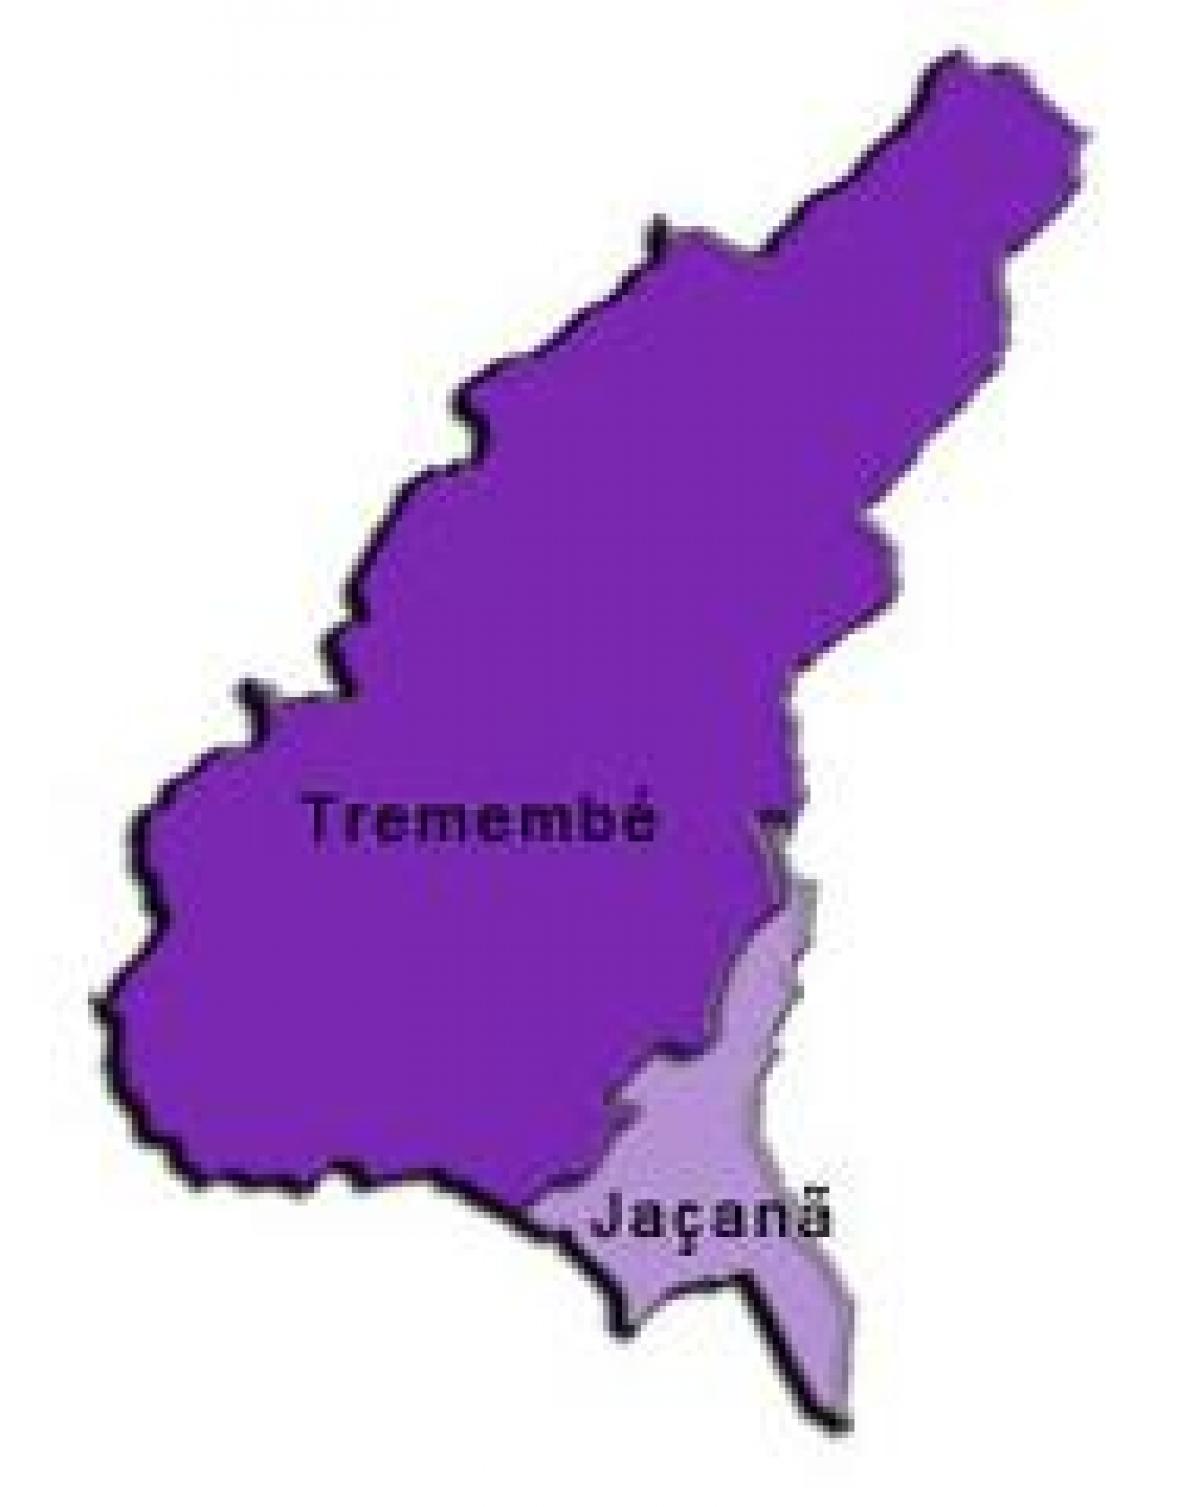 Kort over Jaçanã-Tremembé sub-præfekturet